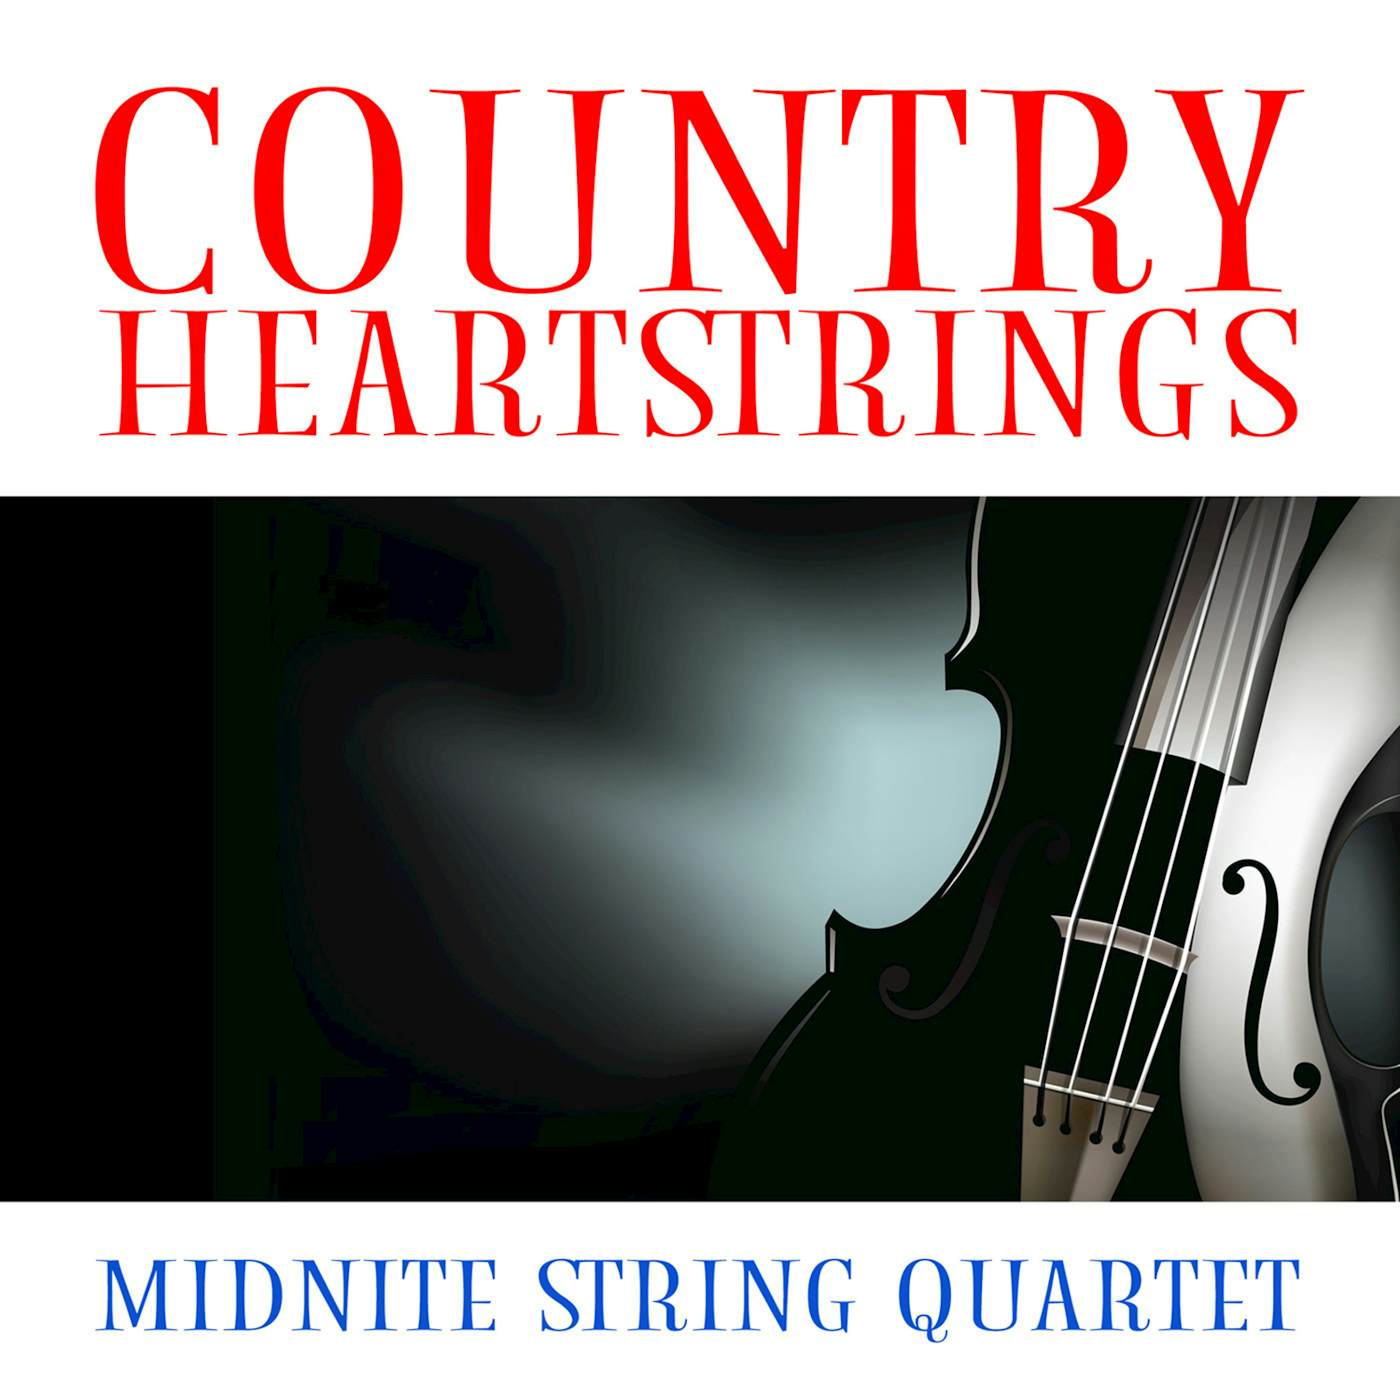 Midnite String Quartet COUNTRY HEARTSTRINGS (MOD) CD